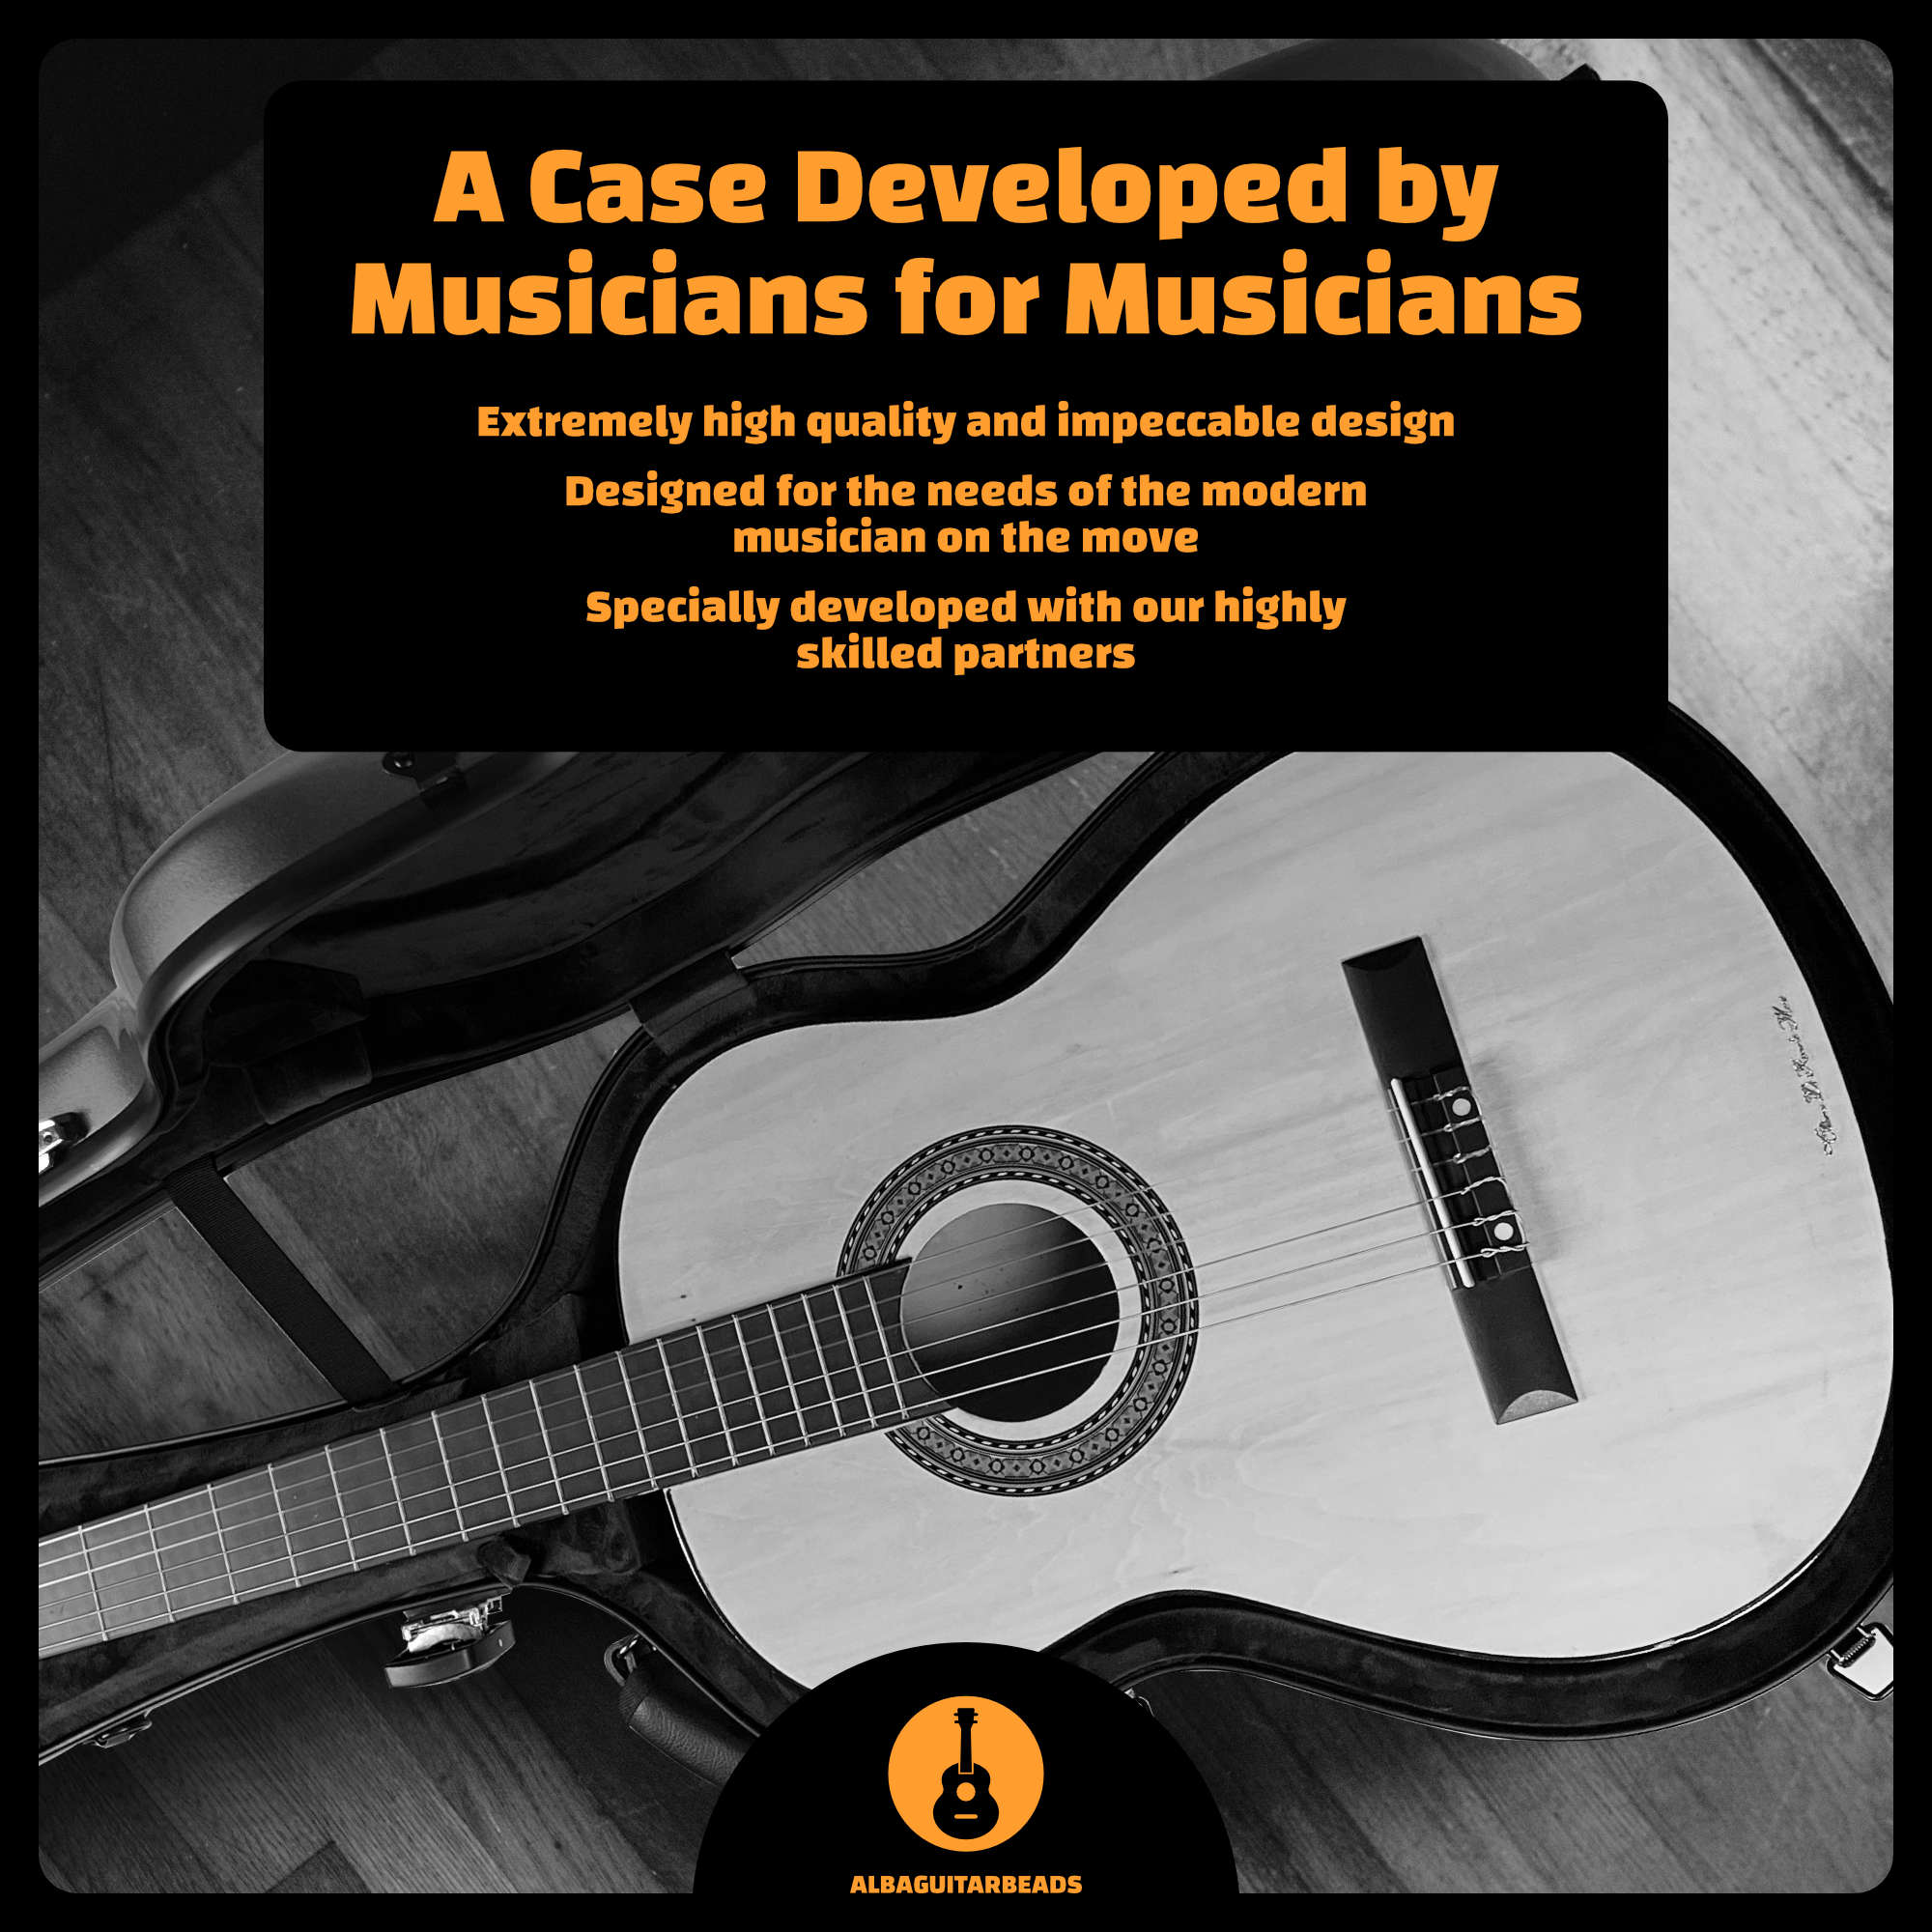 Carbon Alba Guitar Case Yellow Gloss for Classical Guitar Acoustic, Flamenco guitar case